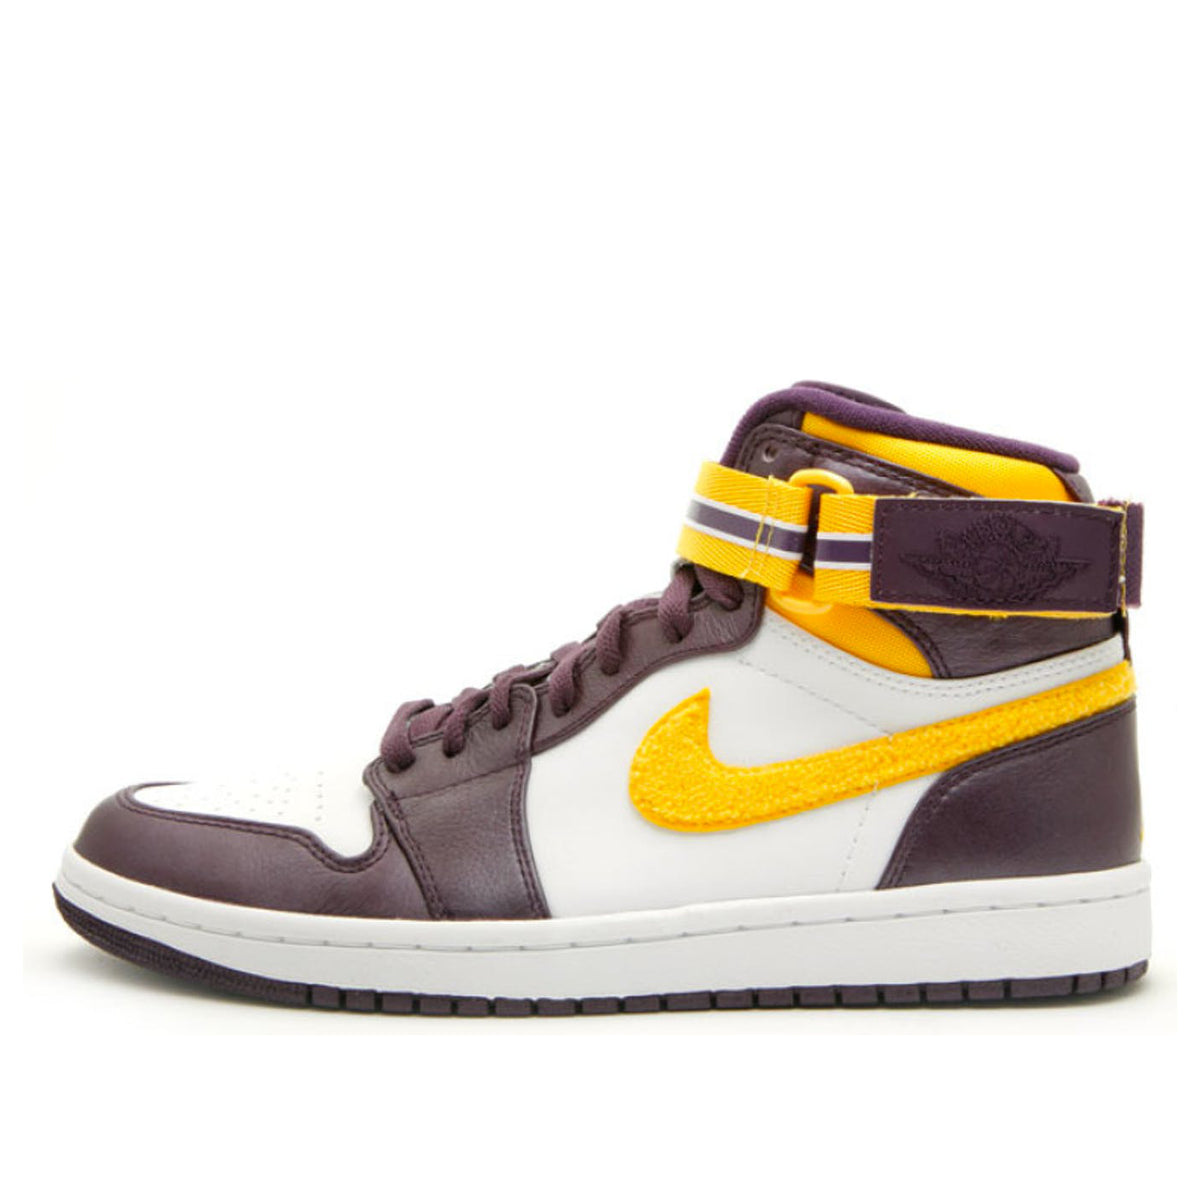 Nike Air Jordan 1 Retro High Strap Mens Sneakers Shoes Sz 12 Grand Purple  Maize